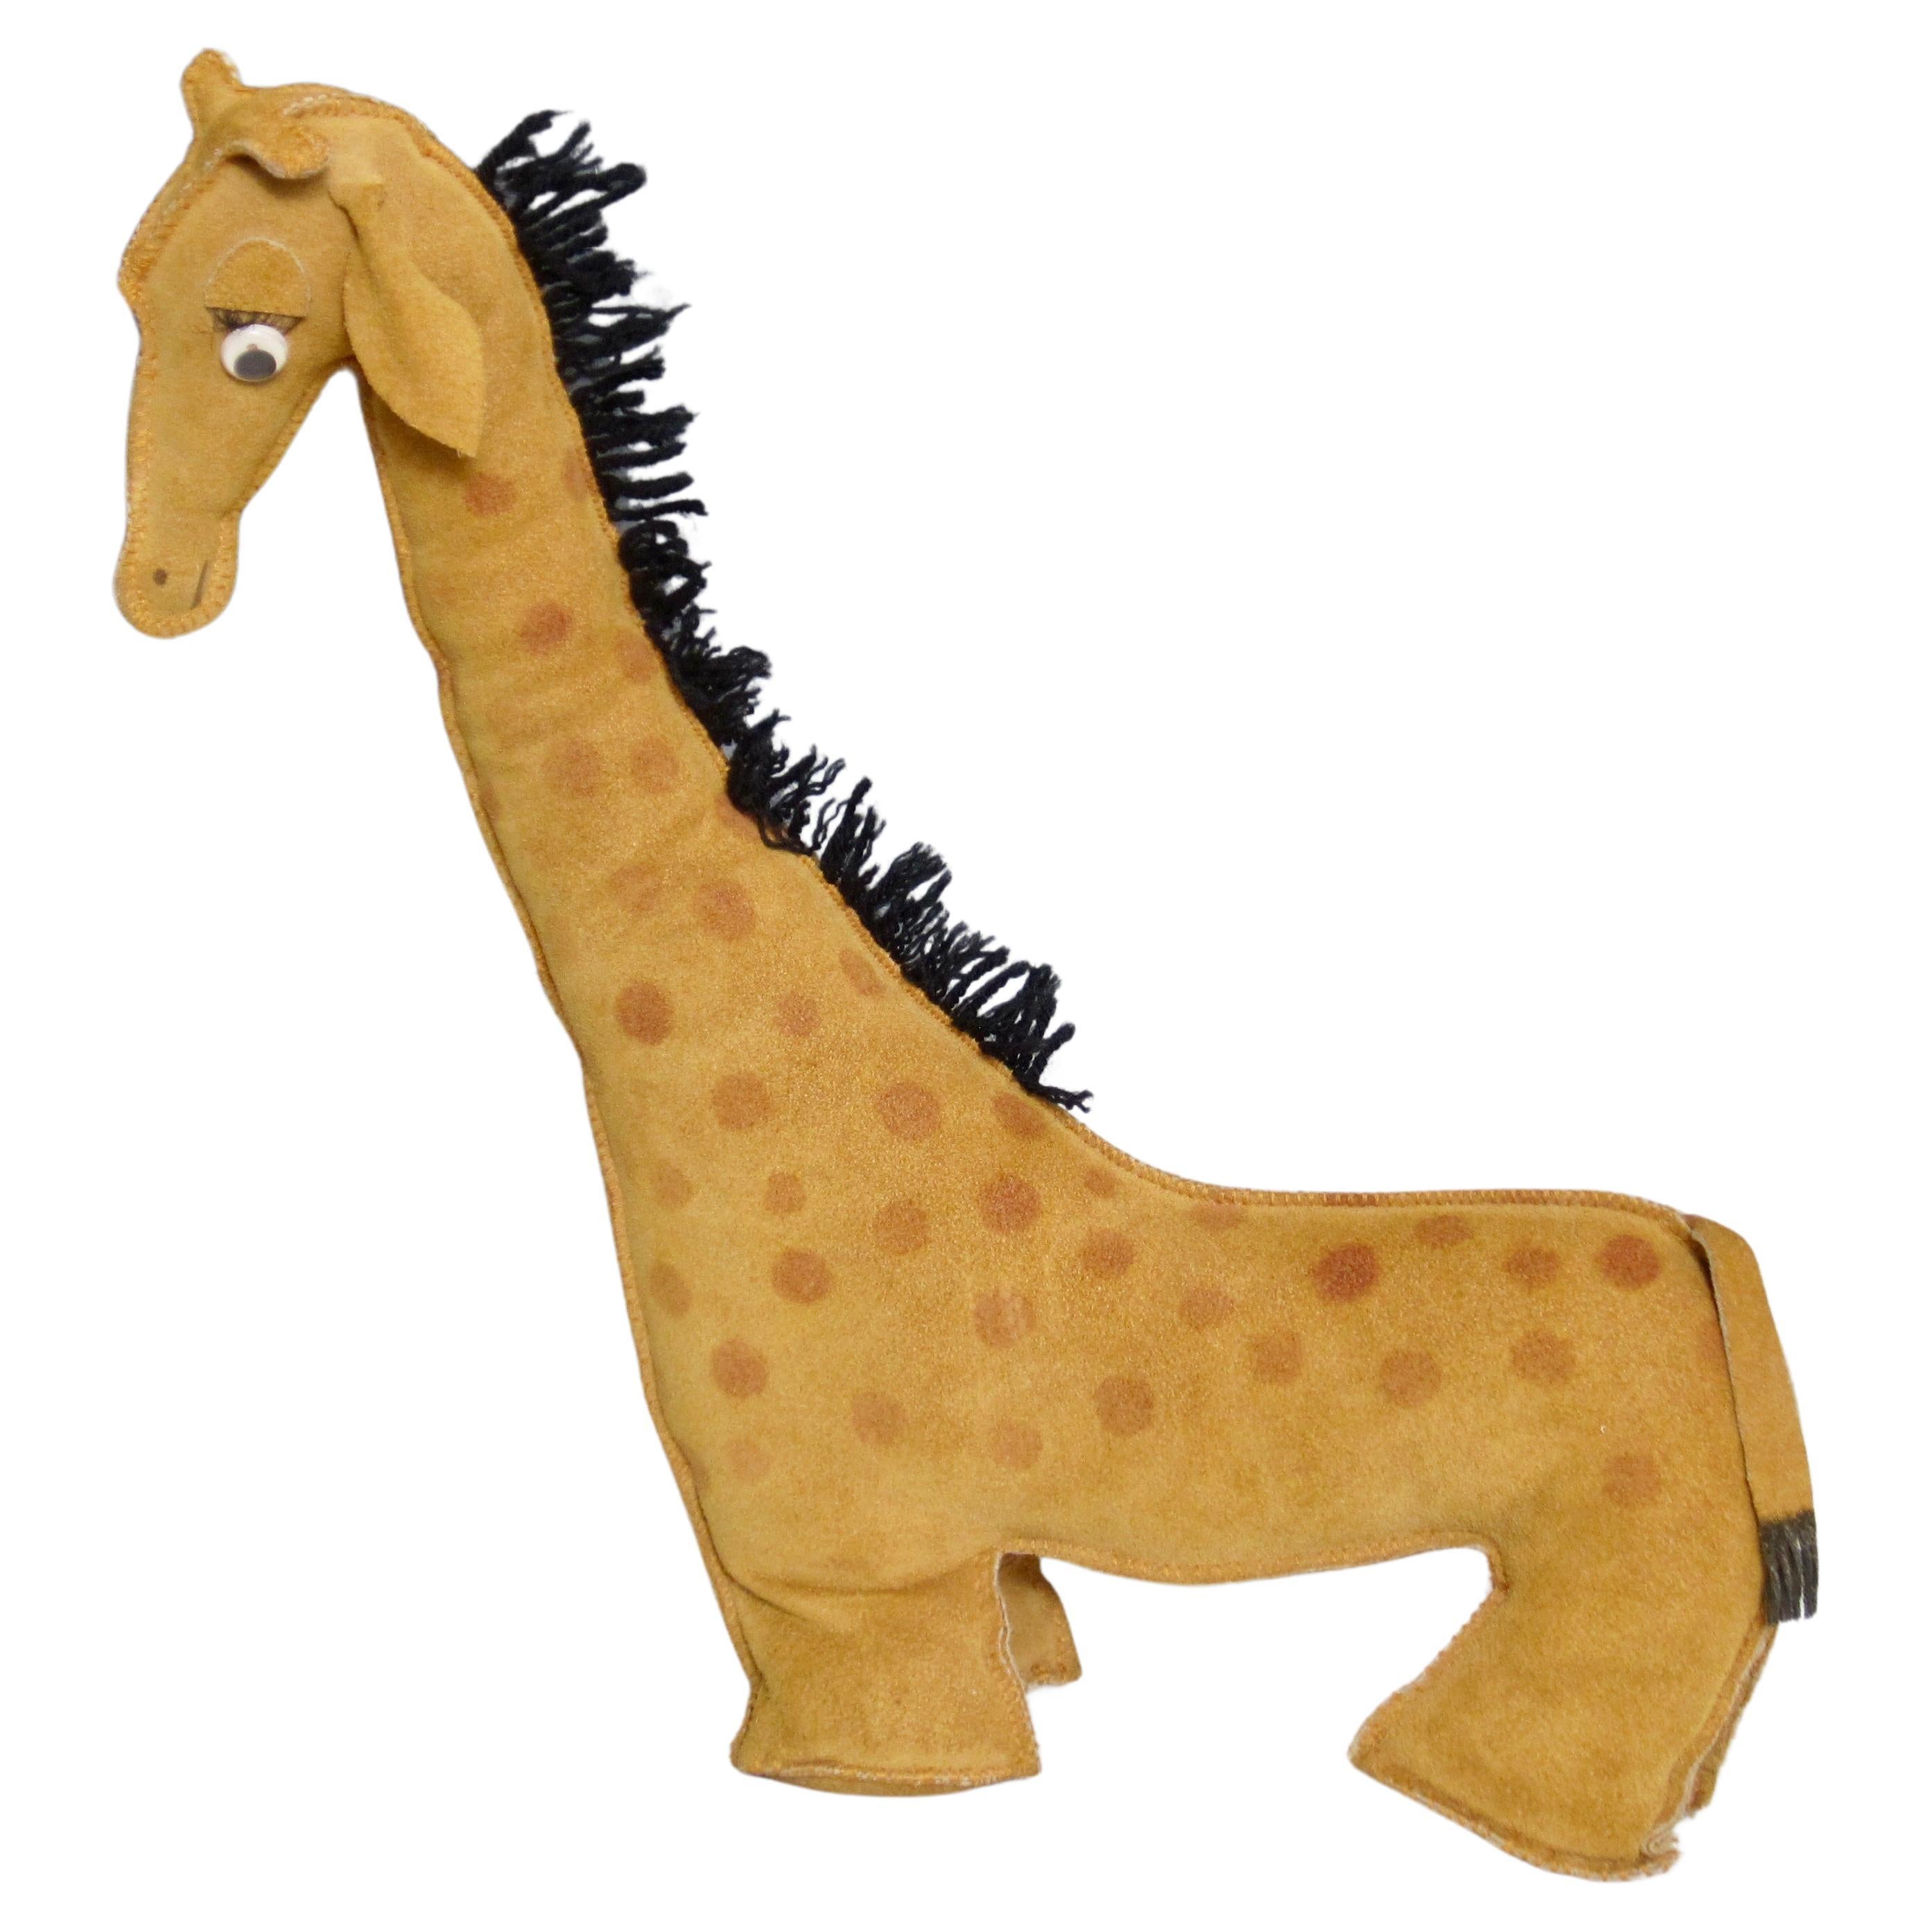 Folk Art Suede Leather Giraffe Stuffed Animal